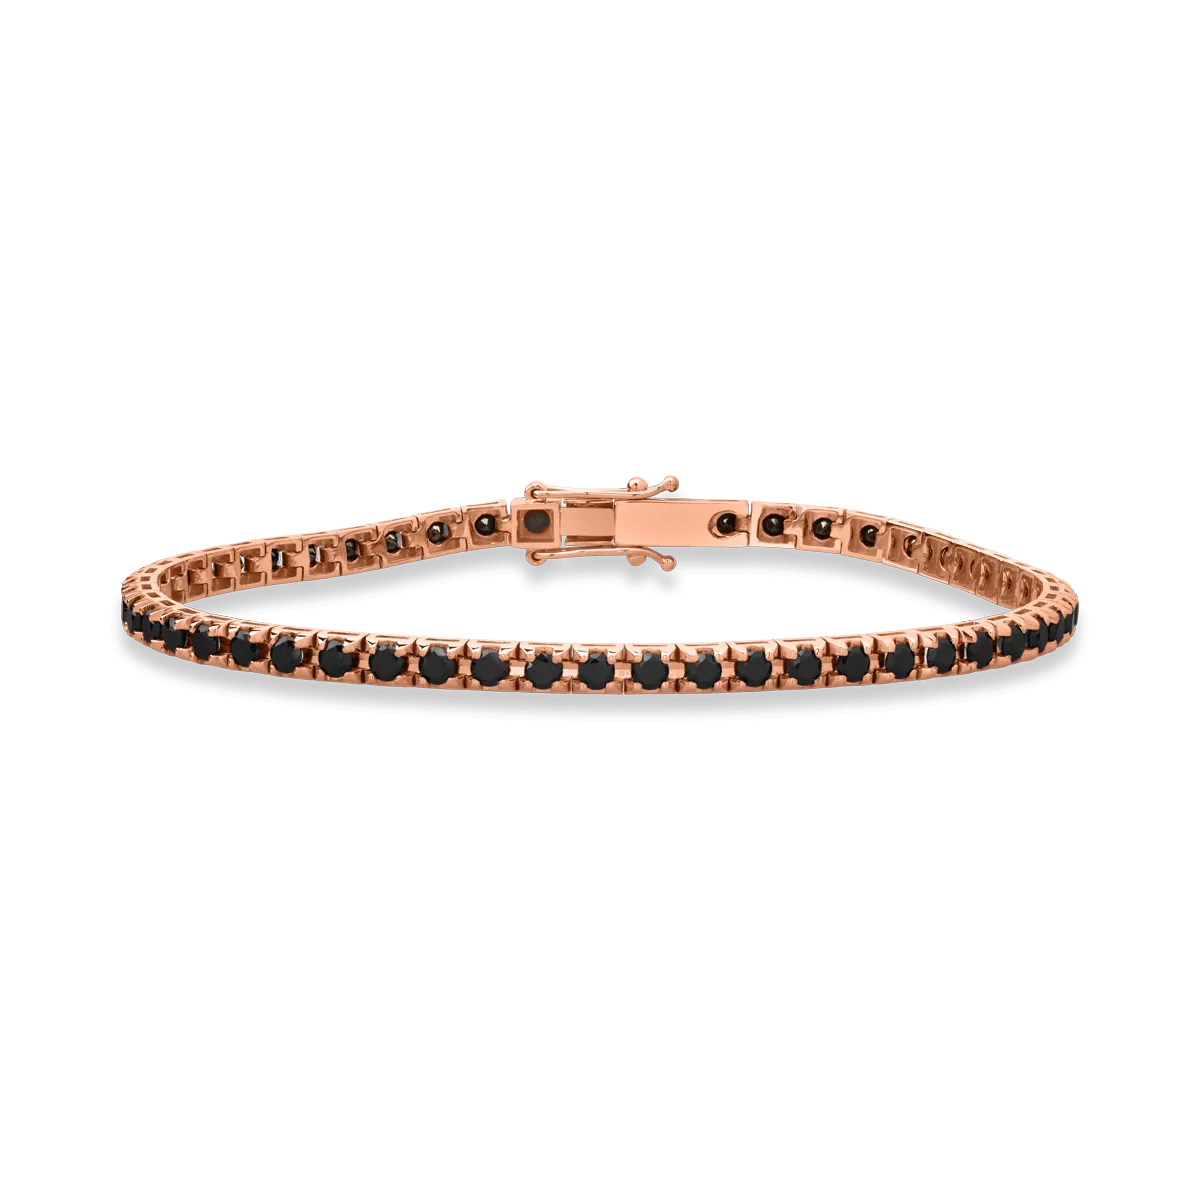 18K rose gold tennis bracelet with 1.44ct black diamonds